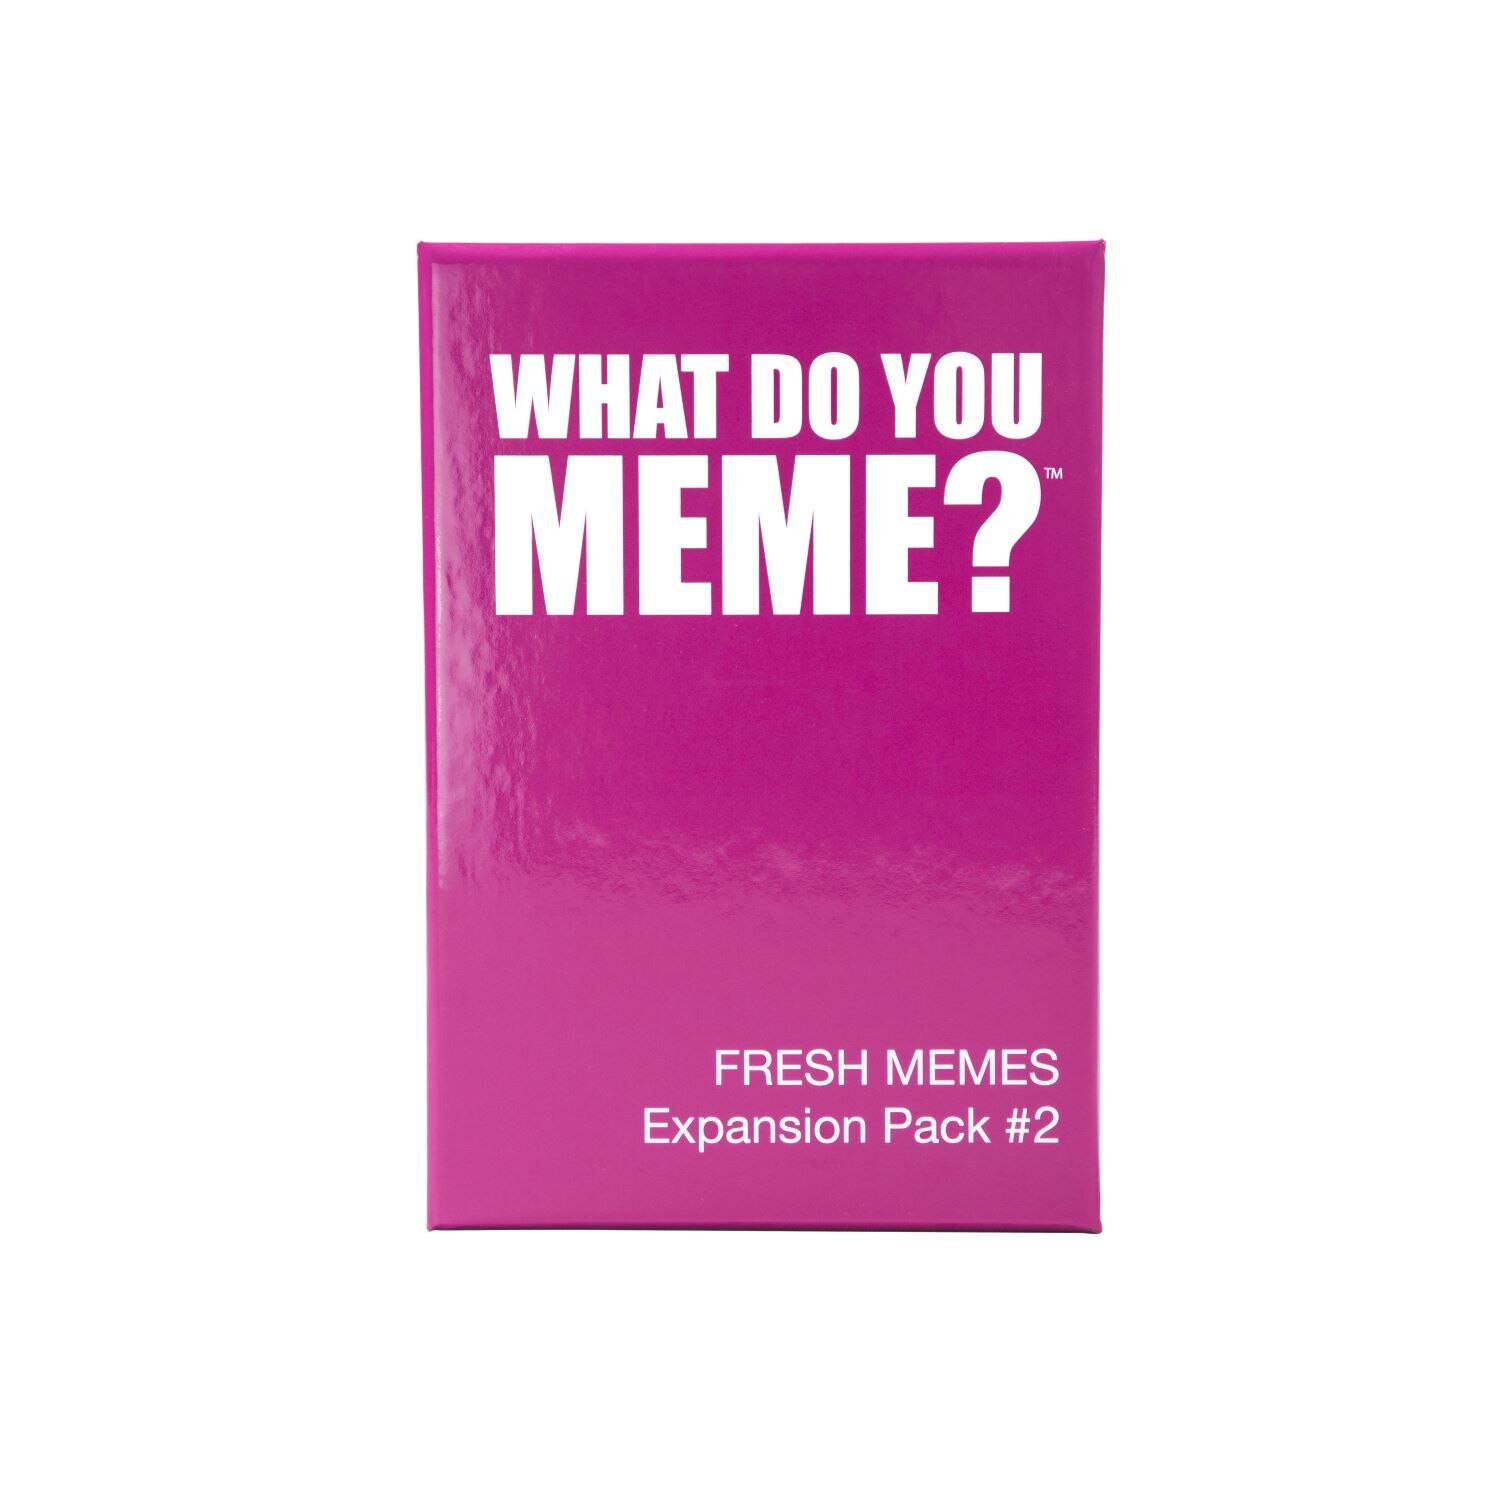 What Do You Meme? Fresh Memes Expansion